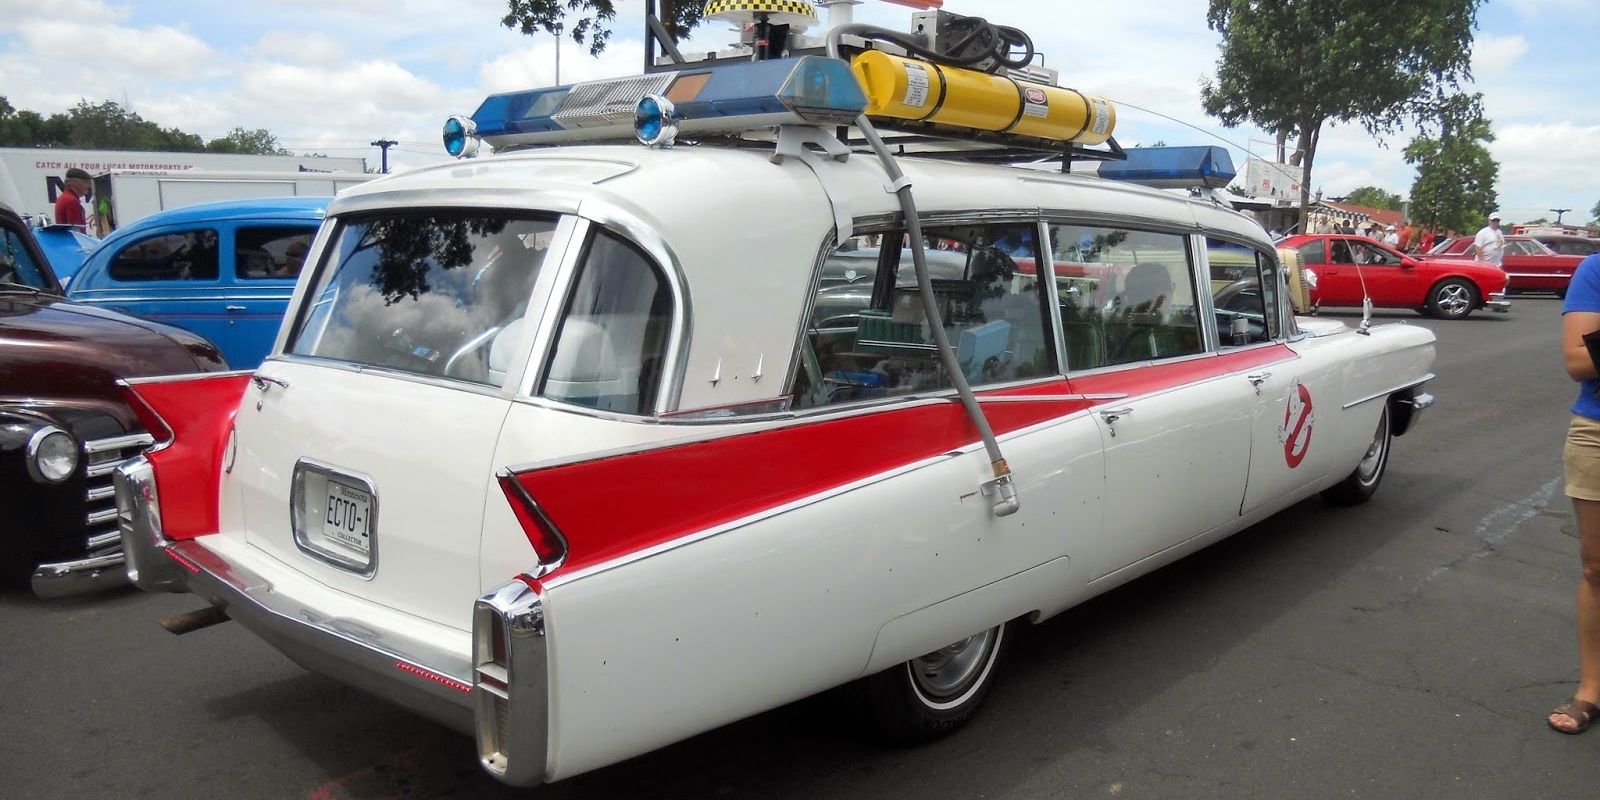 1959 Cadillac Miller-Meteor Ambulance